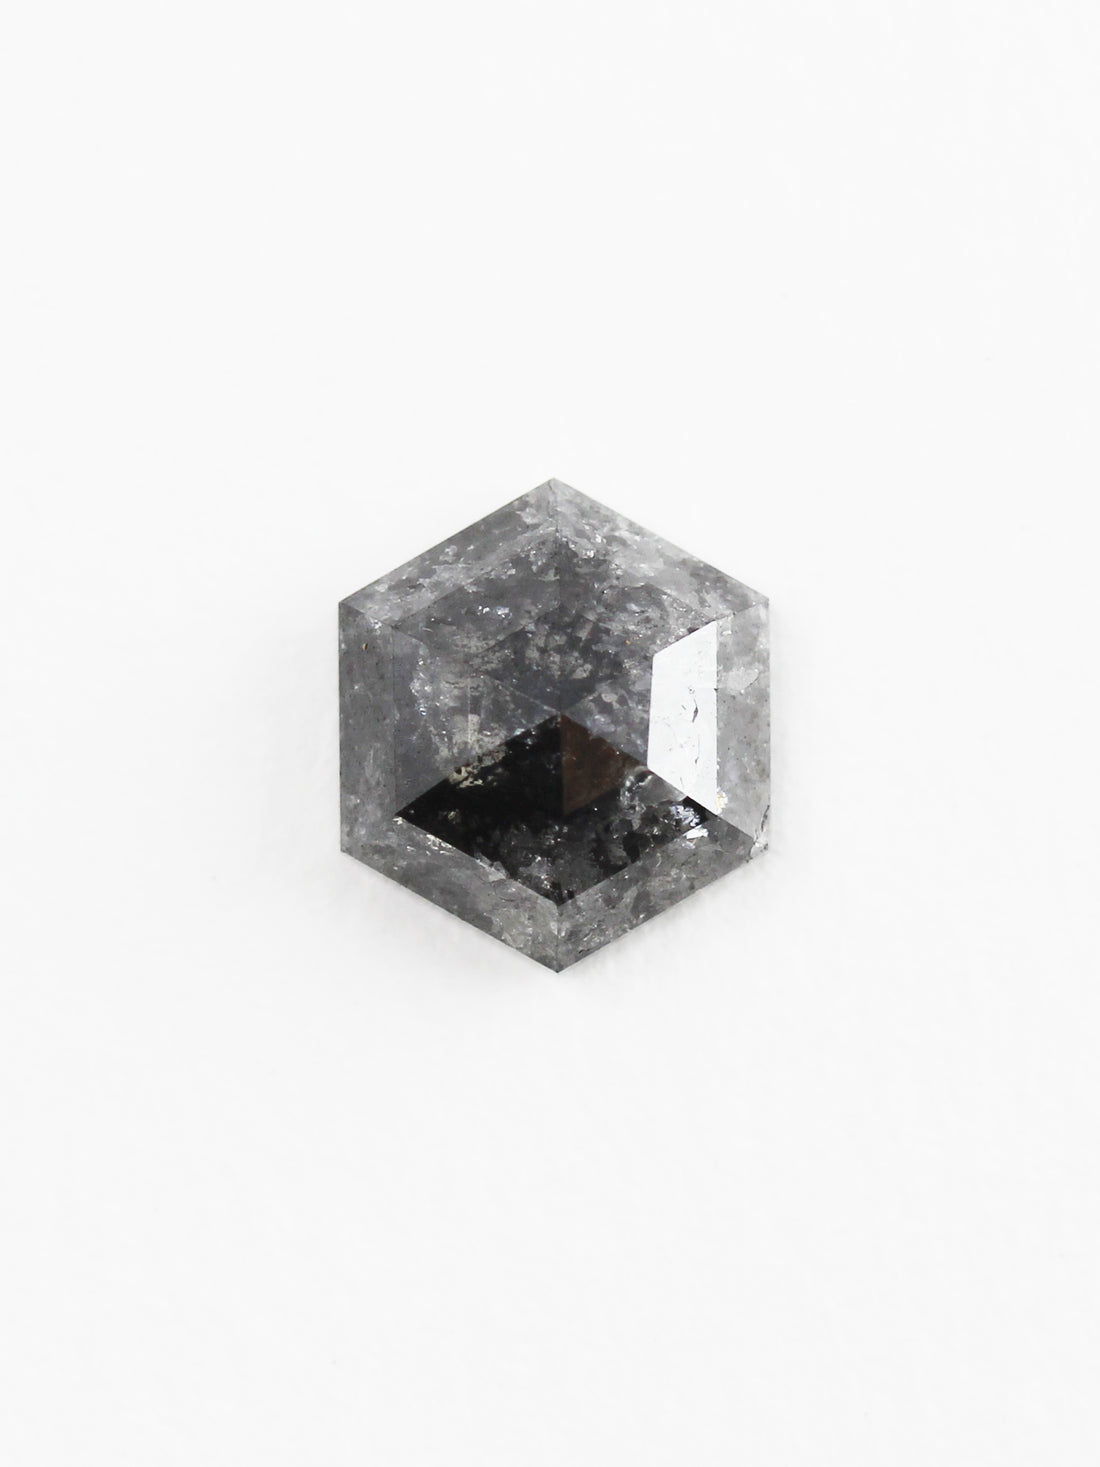 Inventaire hexagonal sel et poivre 1,90 ct SKU SPHEX-04